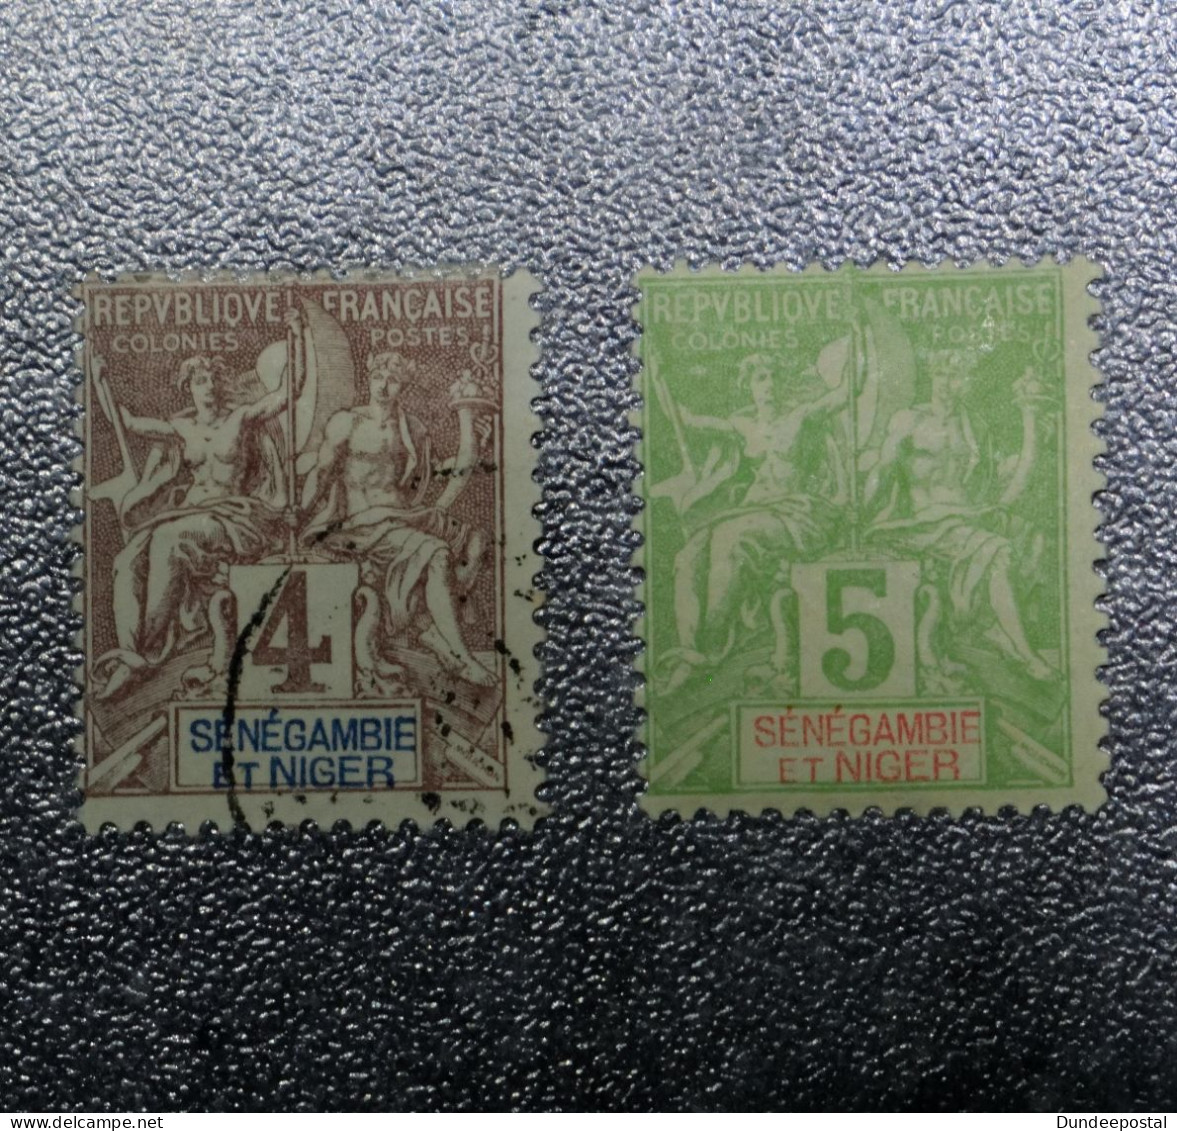 FRANCE STAMPS  Senegambia & Niger   1903  ~~L@@K~~ - Used Stamps